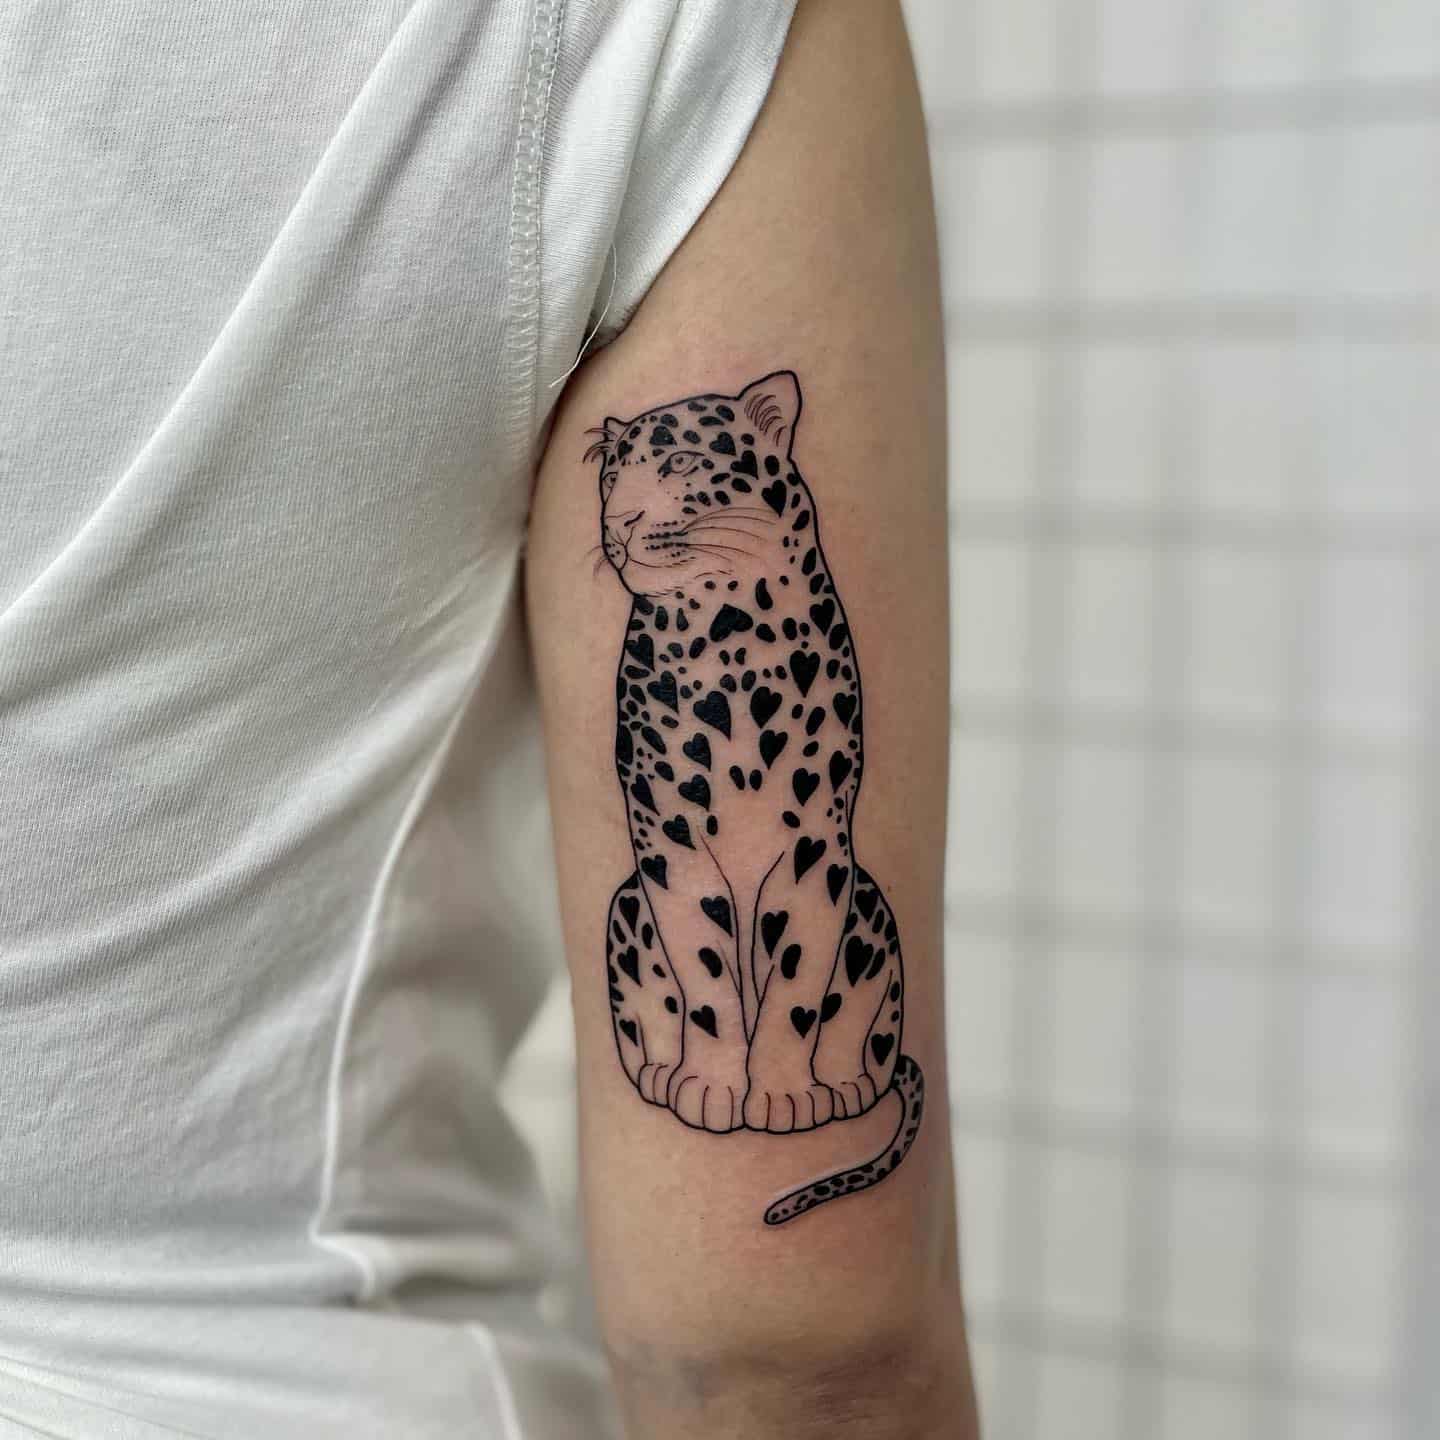 Amazing leoprd tattoo on arm by laurensmithtattoos